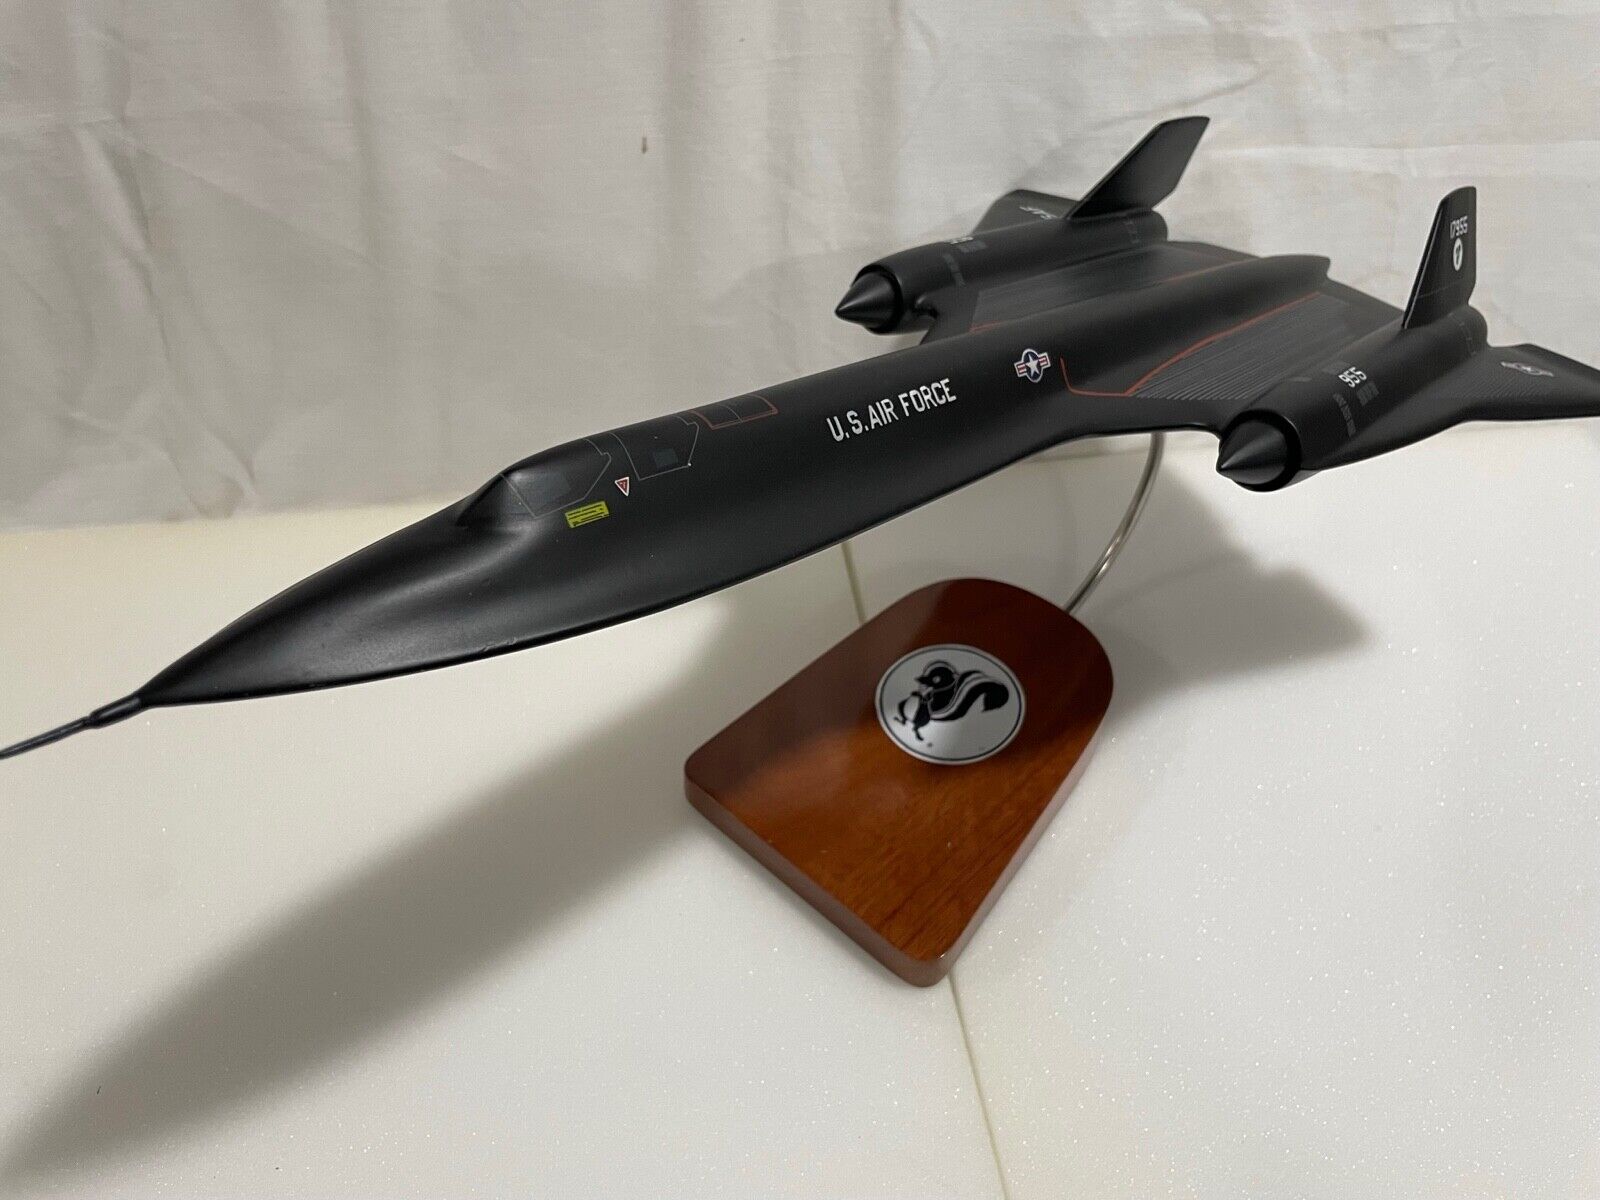 Lockheed SR-71A “Blackbird”, world famous record holder